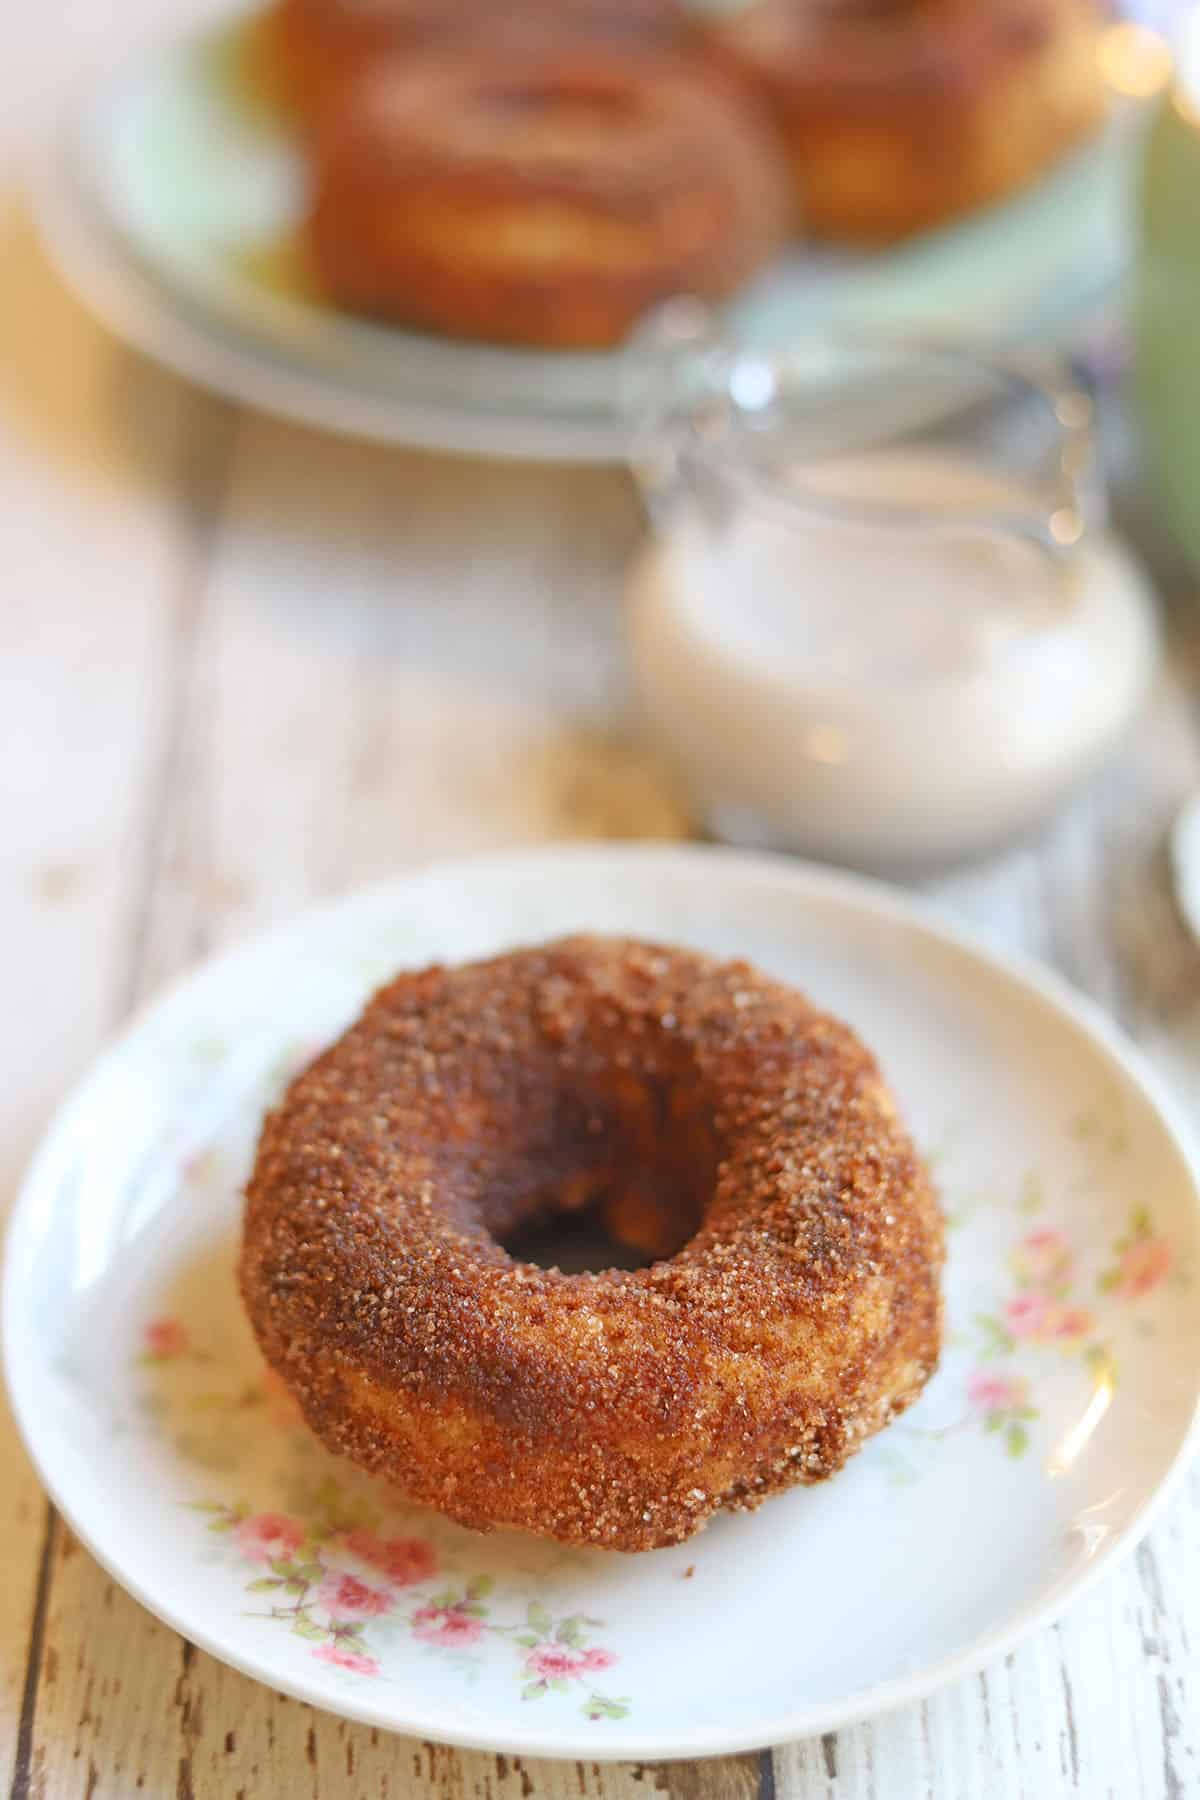 Cinnamon donut on floral plate.